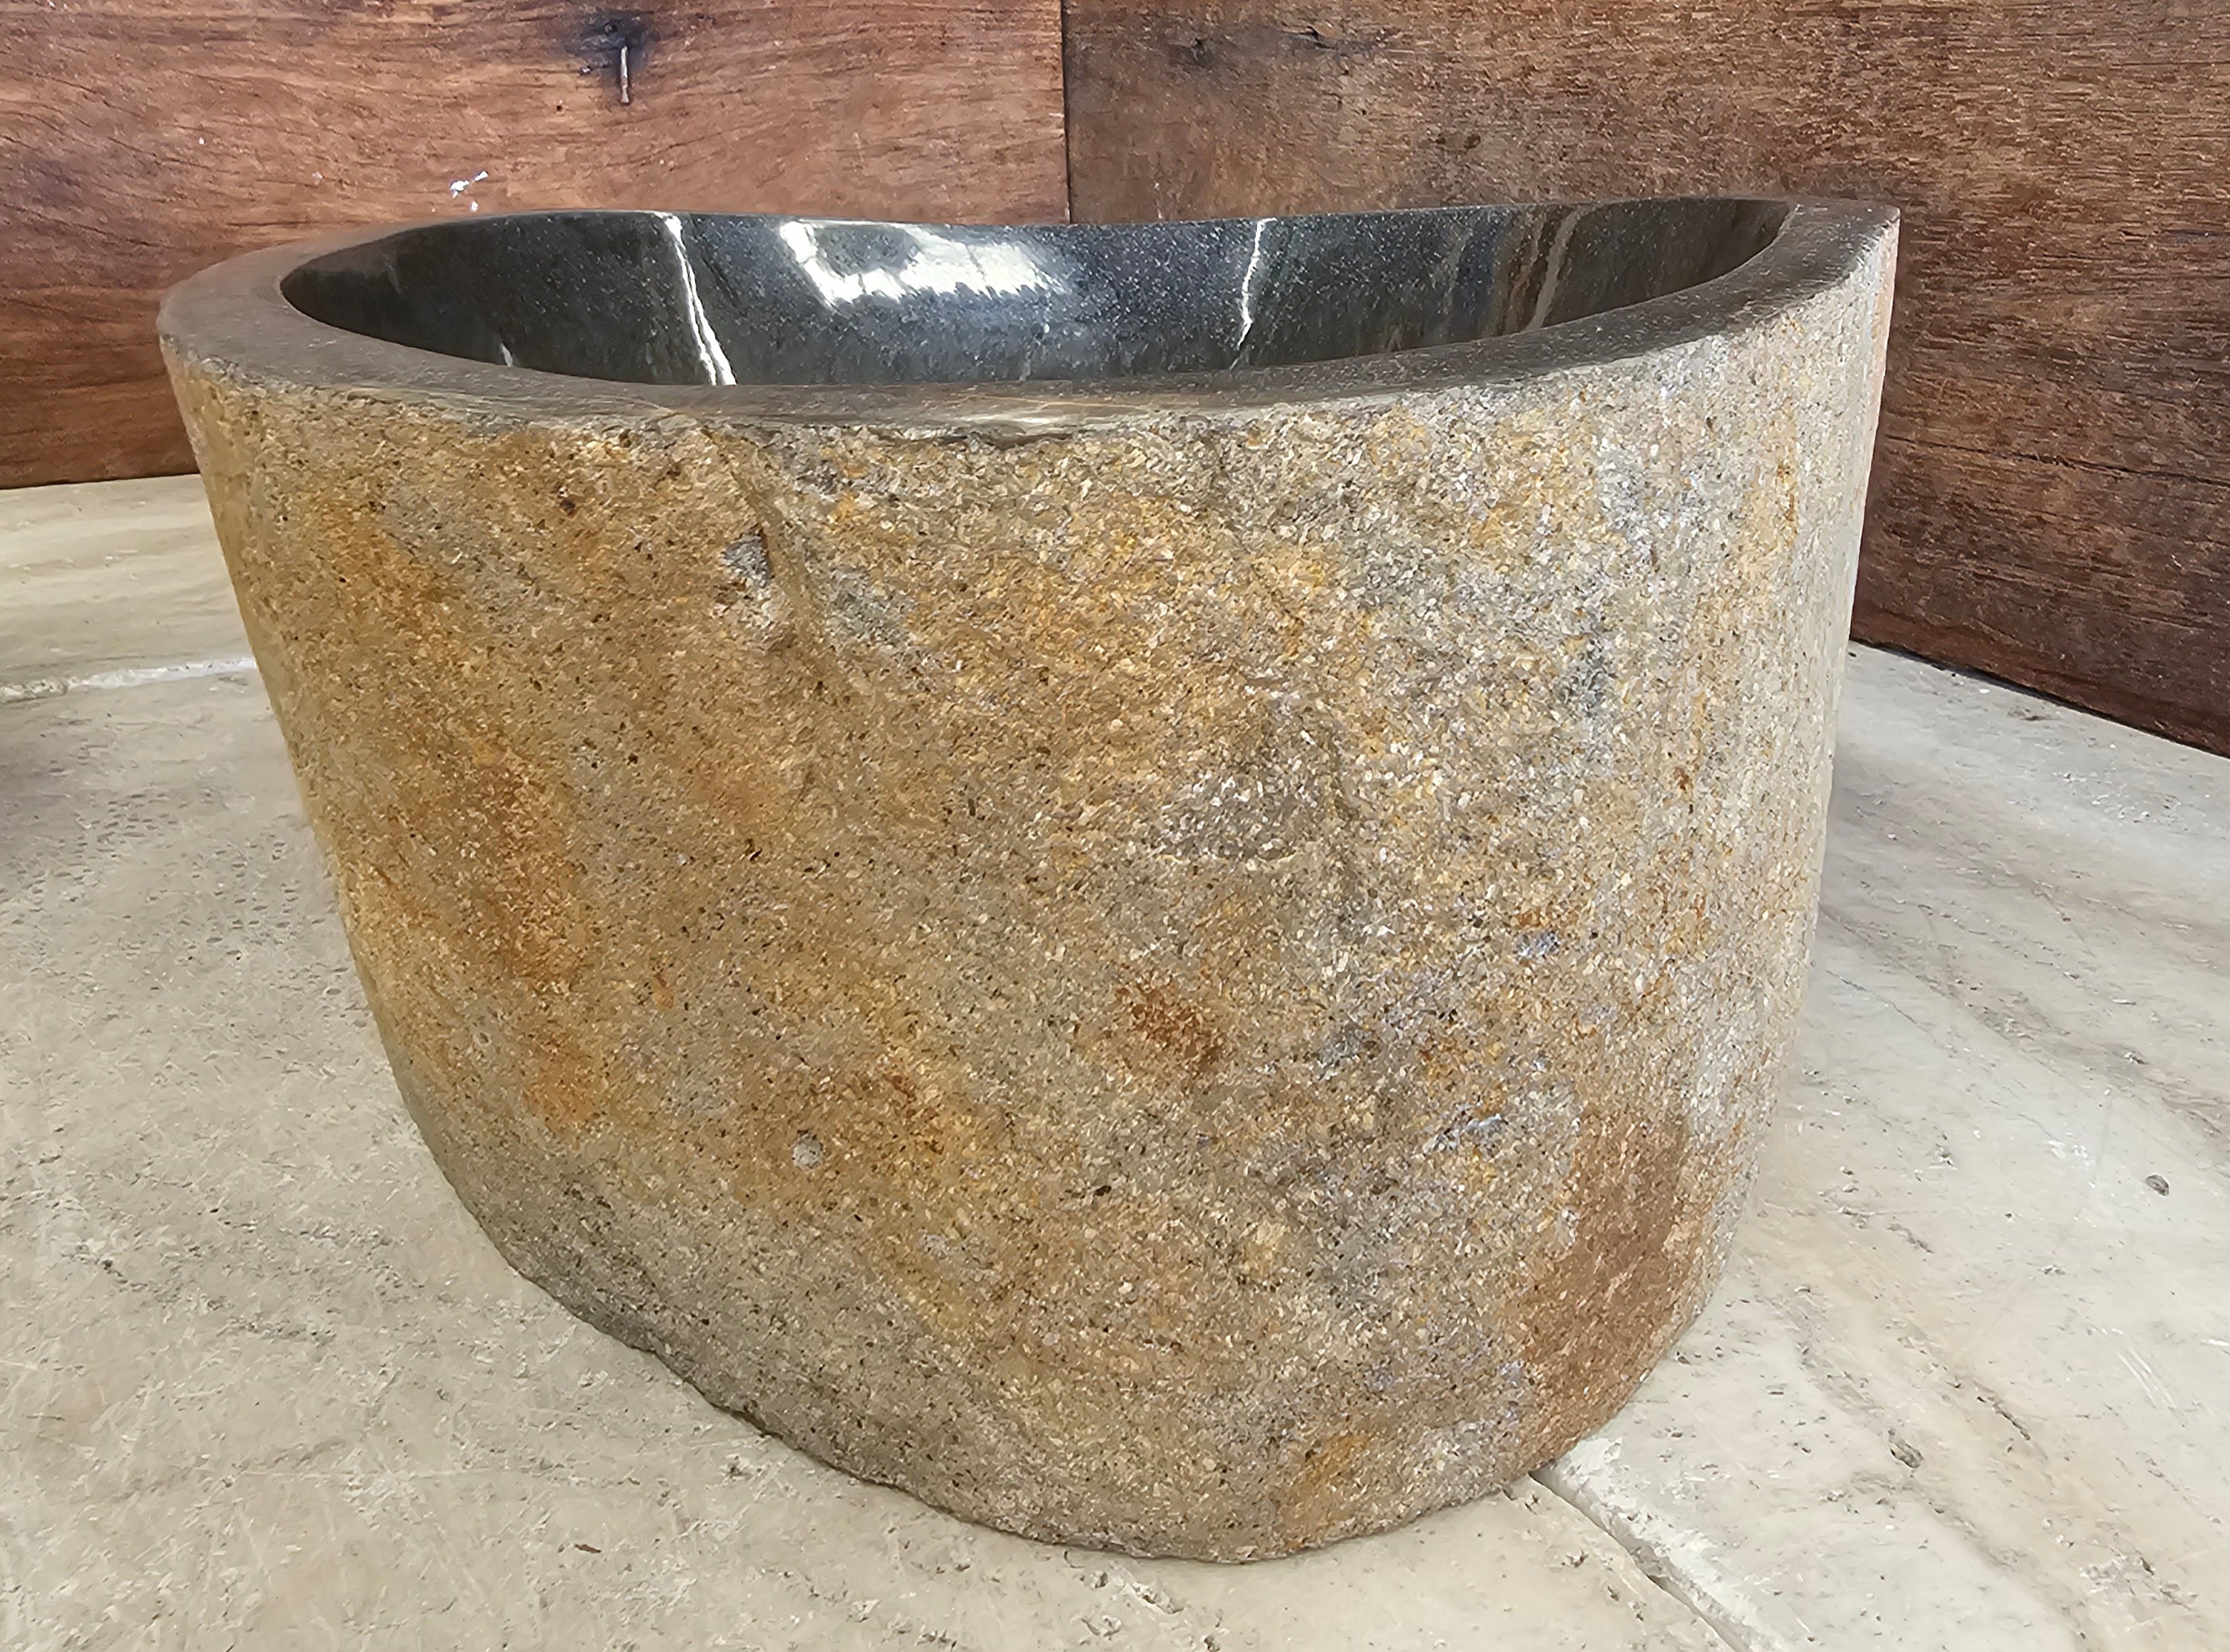 Handmade Natural Oval River Stone Bathroom Basin - Twin Set RM 2309021